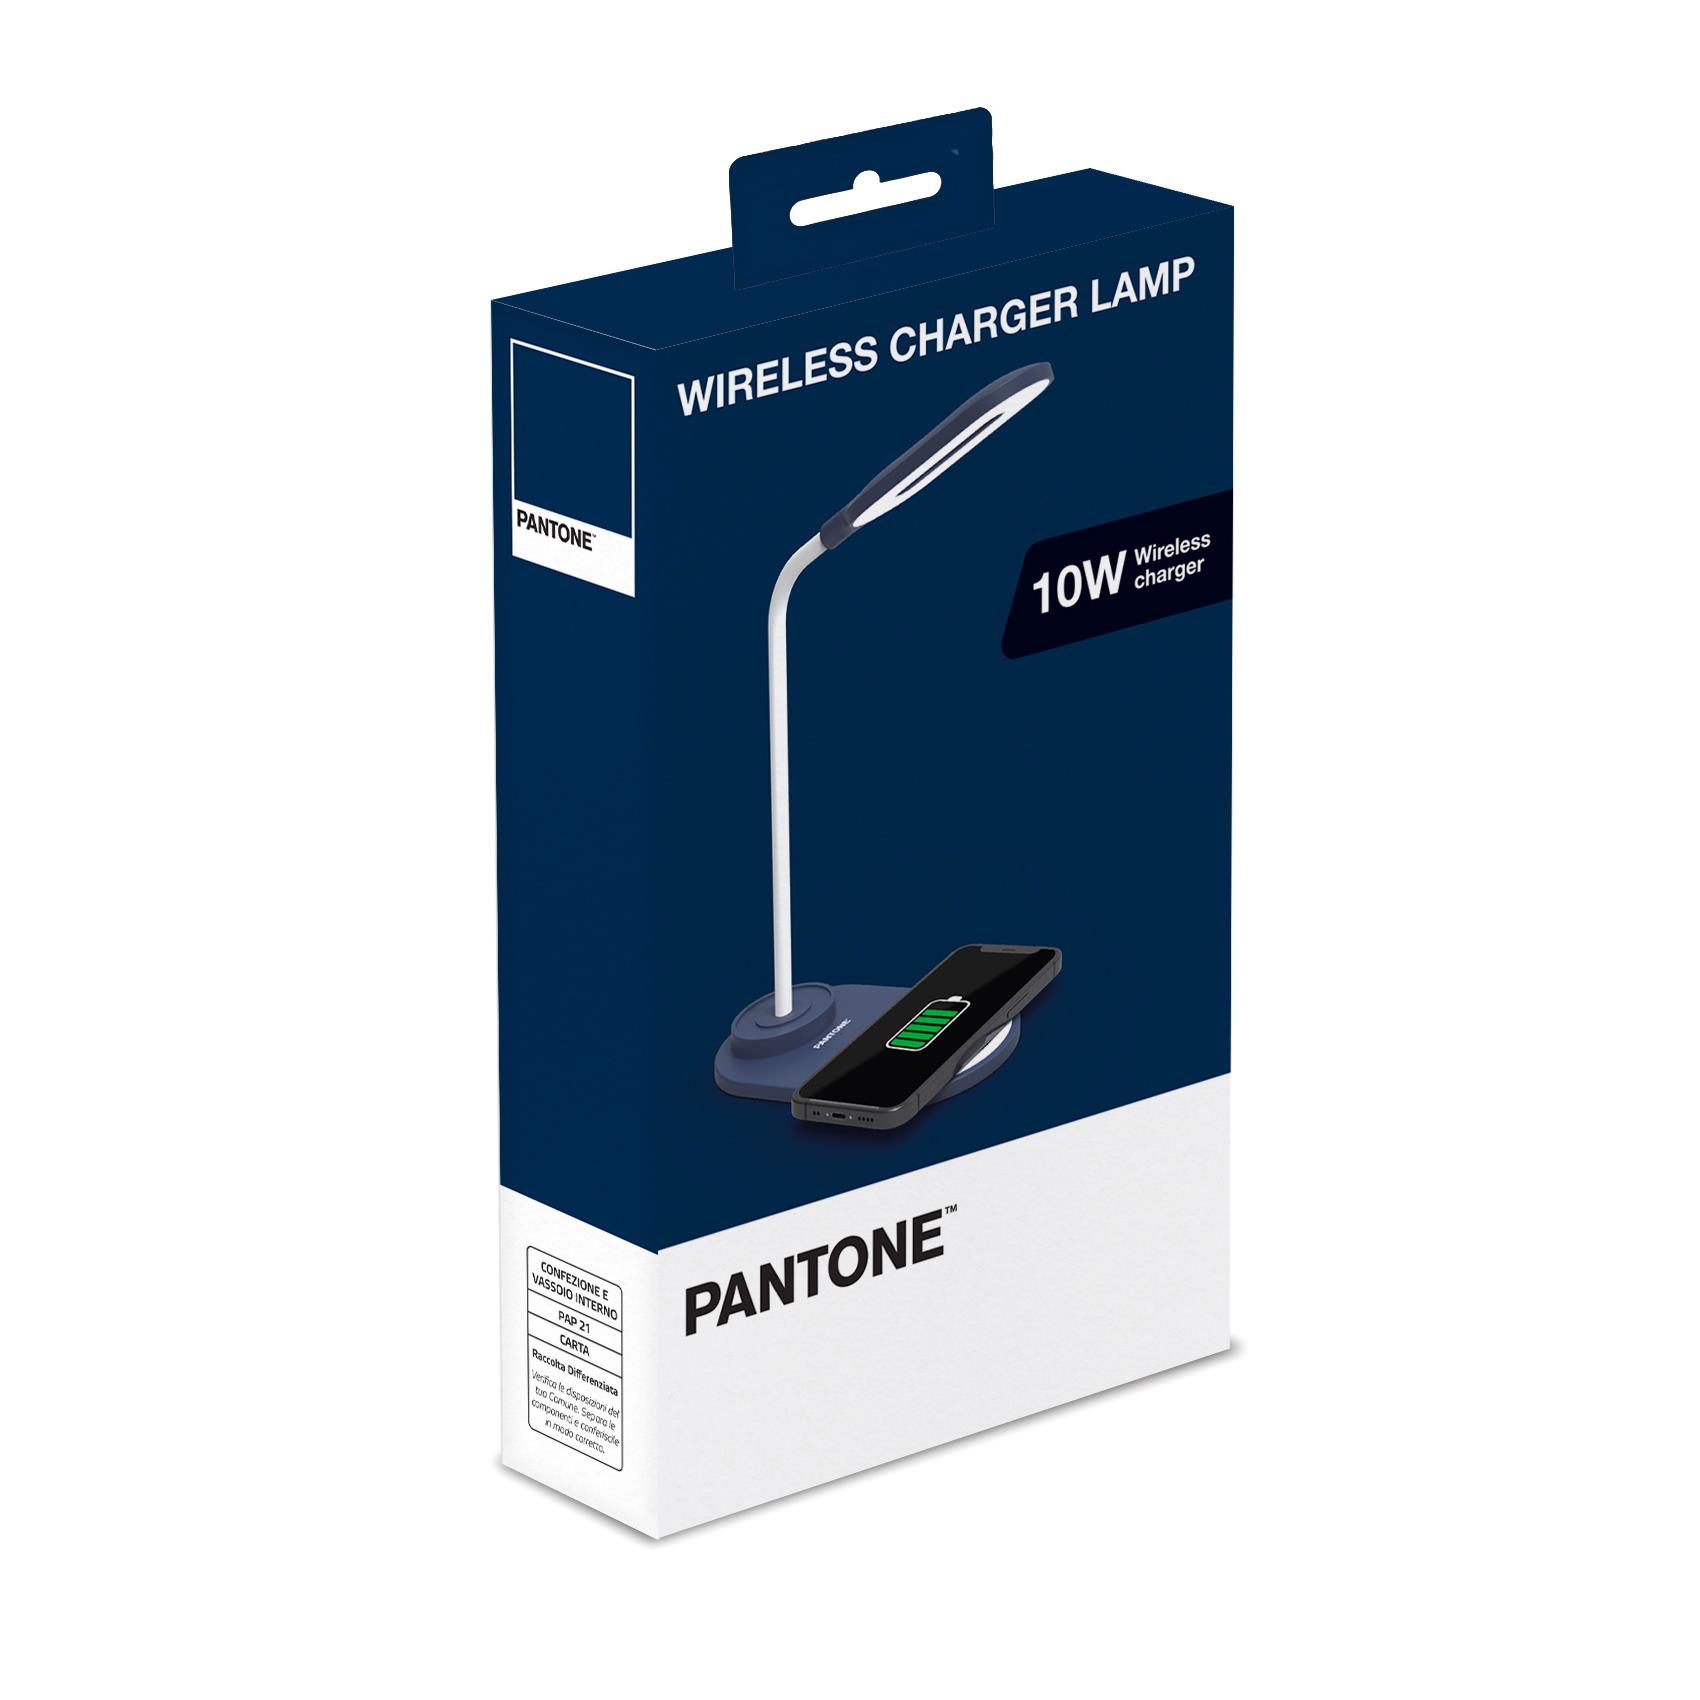 Wireless Charger Lamp Mini Nv Pantone Pt Ld001n 4713213365328